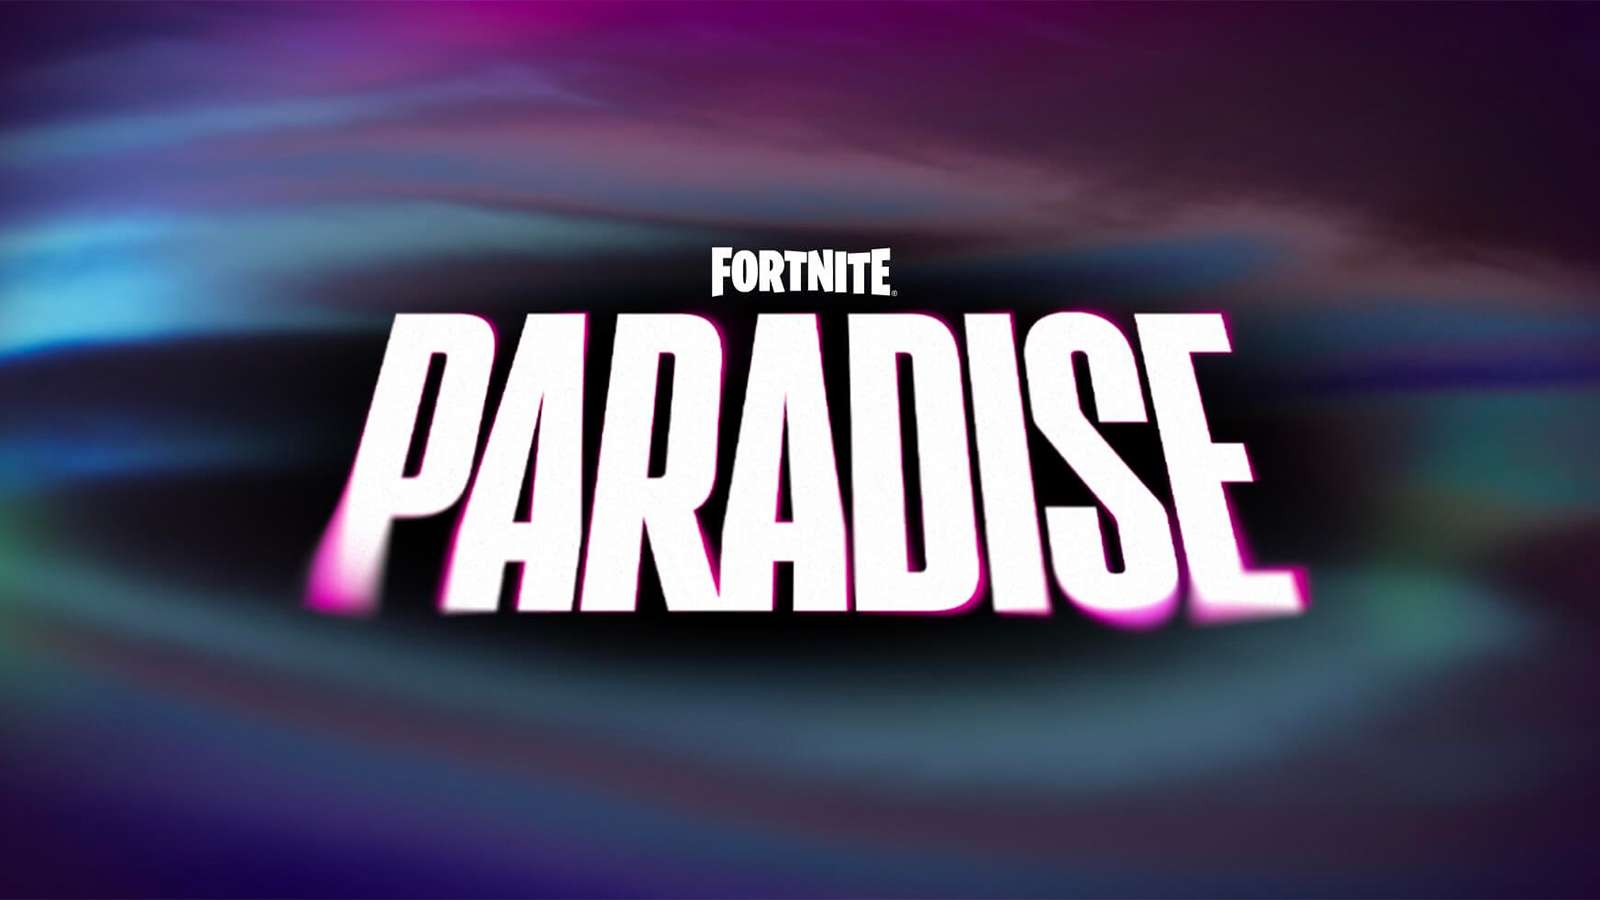 A logo for Fortnite Paradise